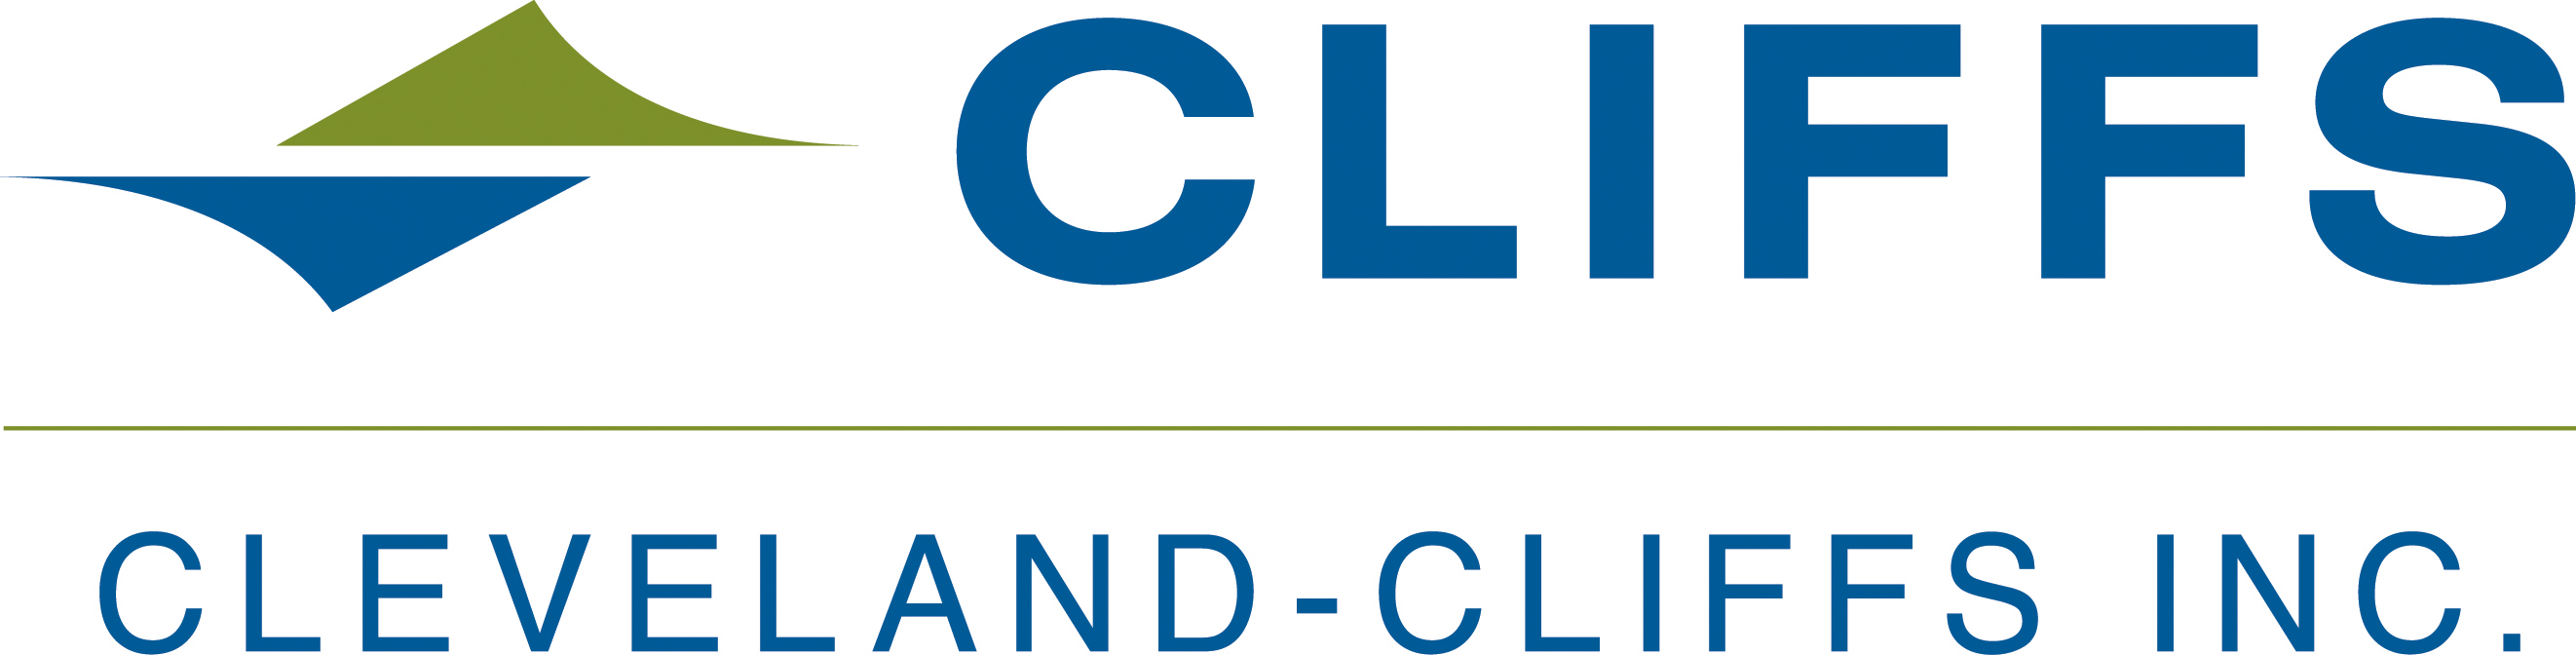 CLF Cleveland Cliffs Inc S 4 CLF Cliffs Natural Resources Inc S 4 February 14 2018